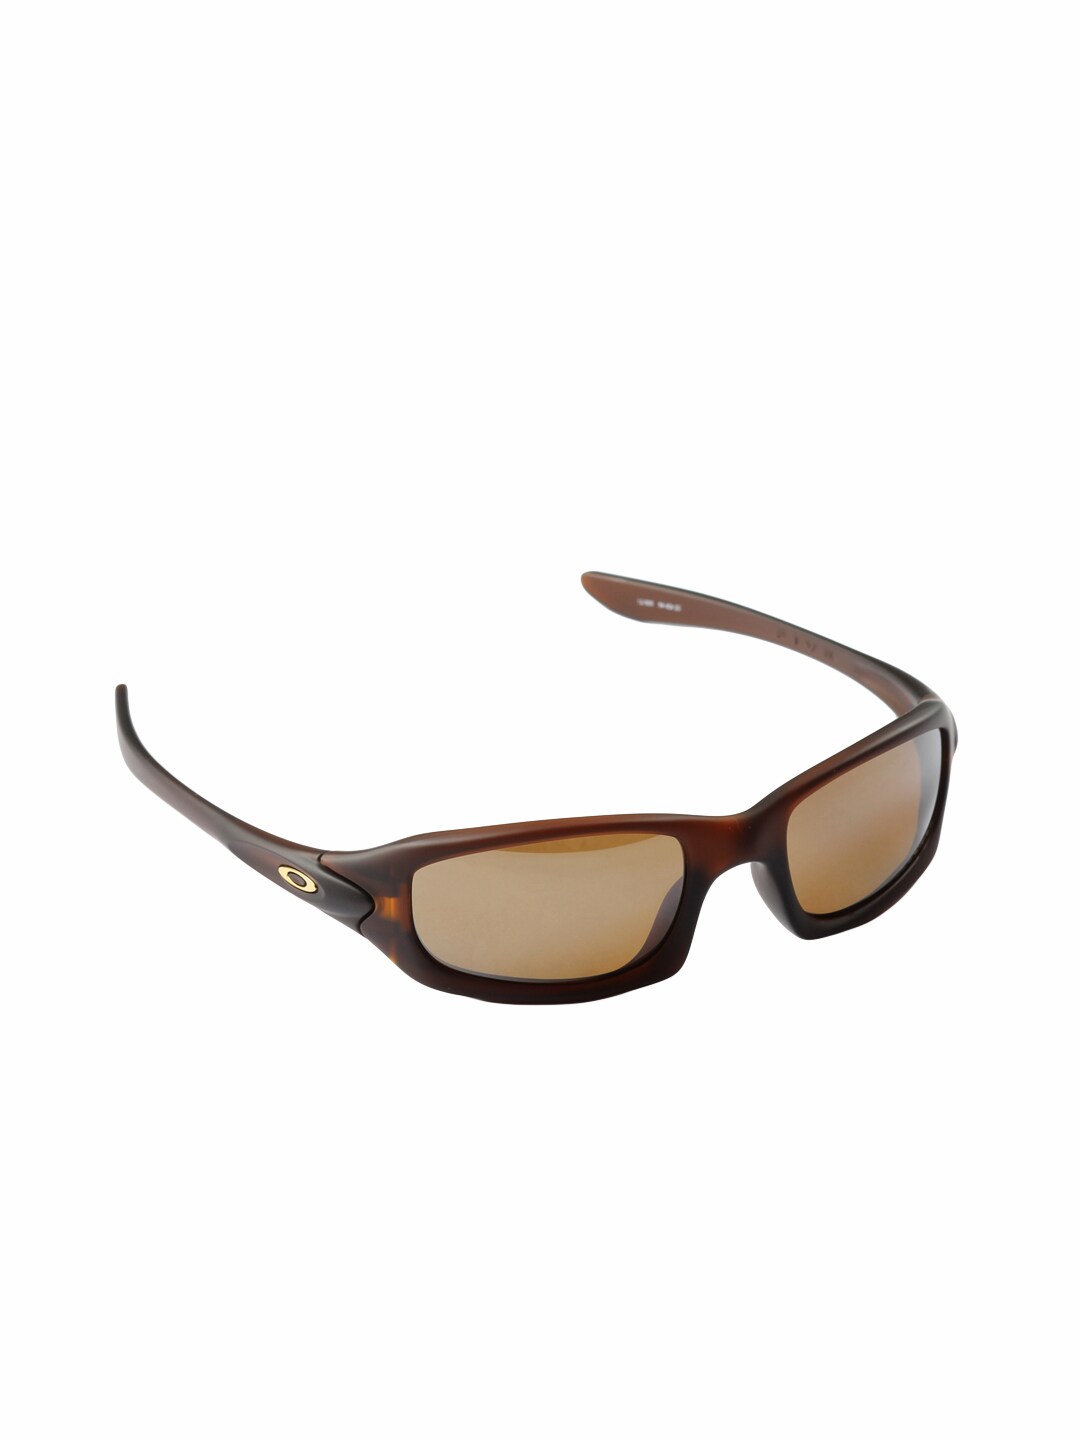 Oakley Men Brown Sunglasses